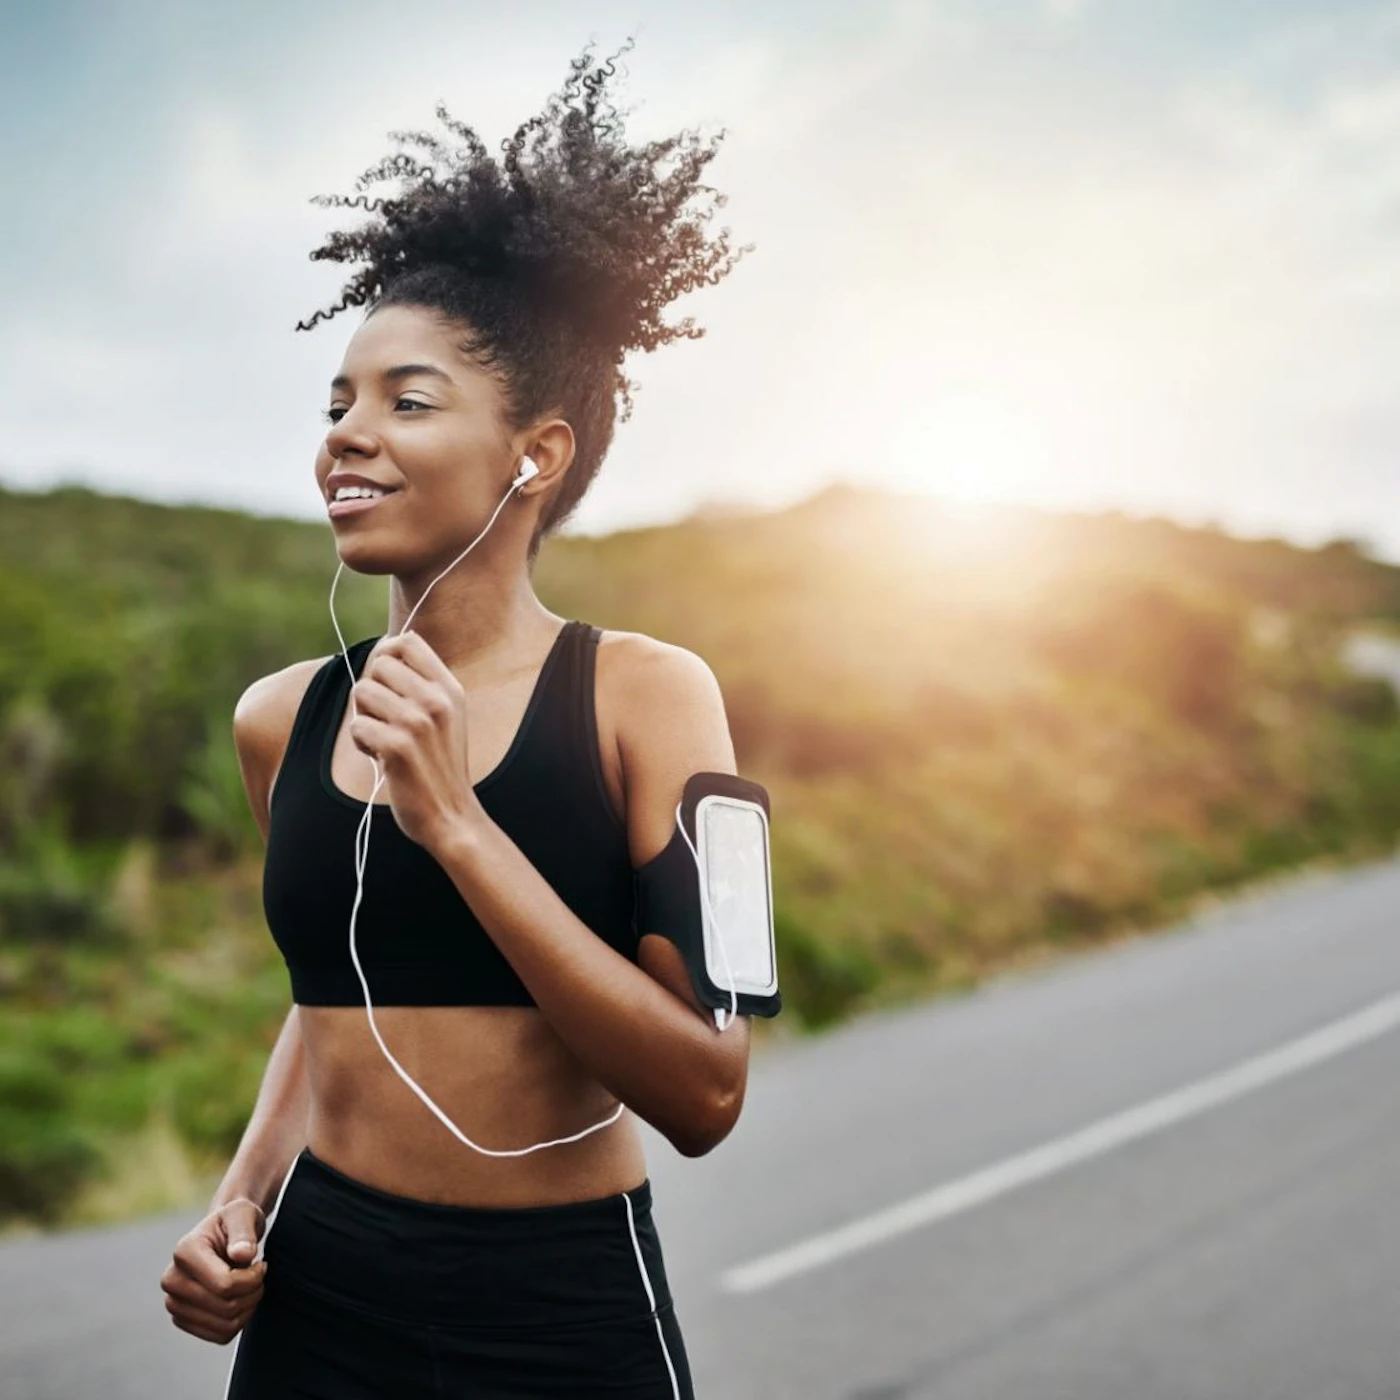 10 top tracks for marathon training, according to Strava users